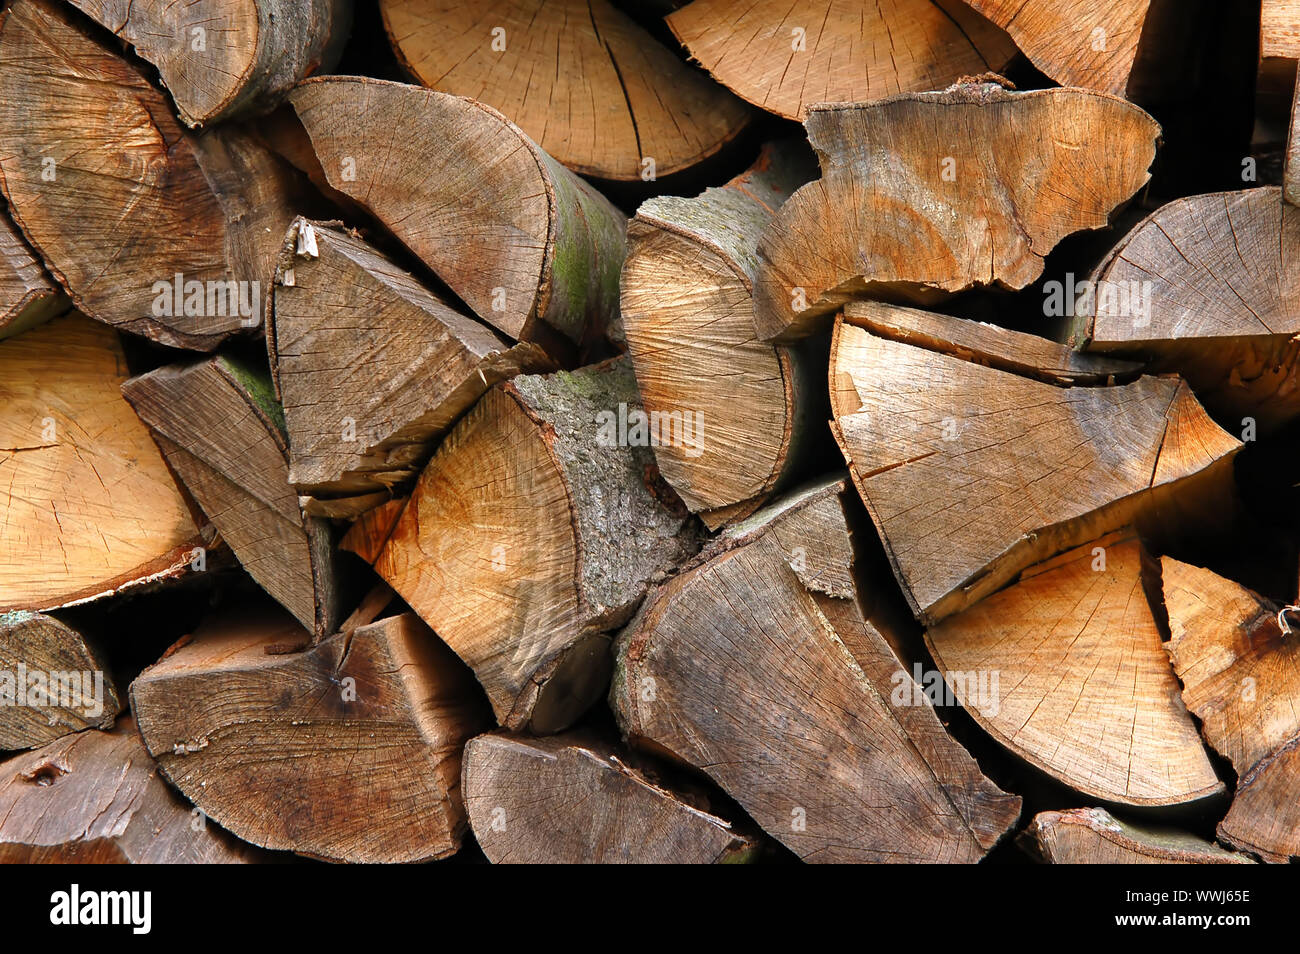 Wood piles background Stock Photo